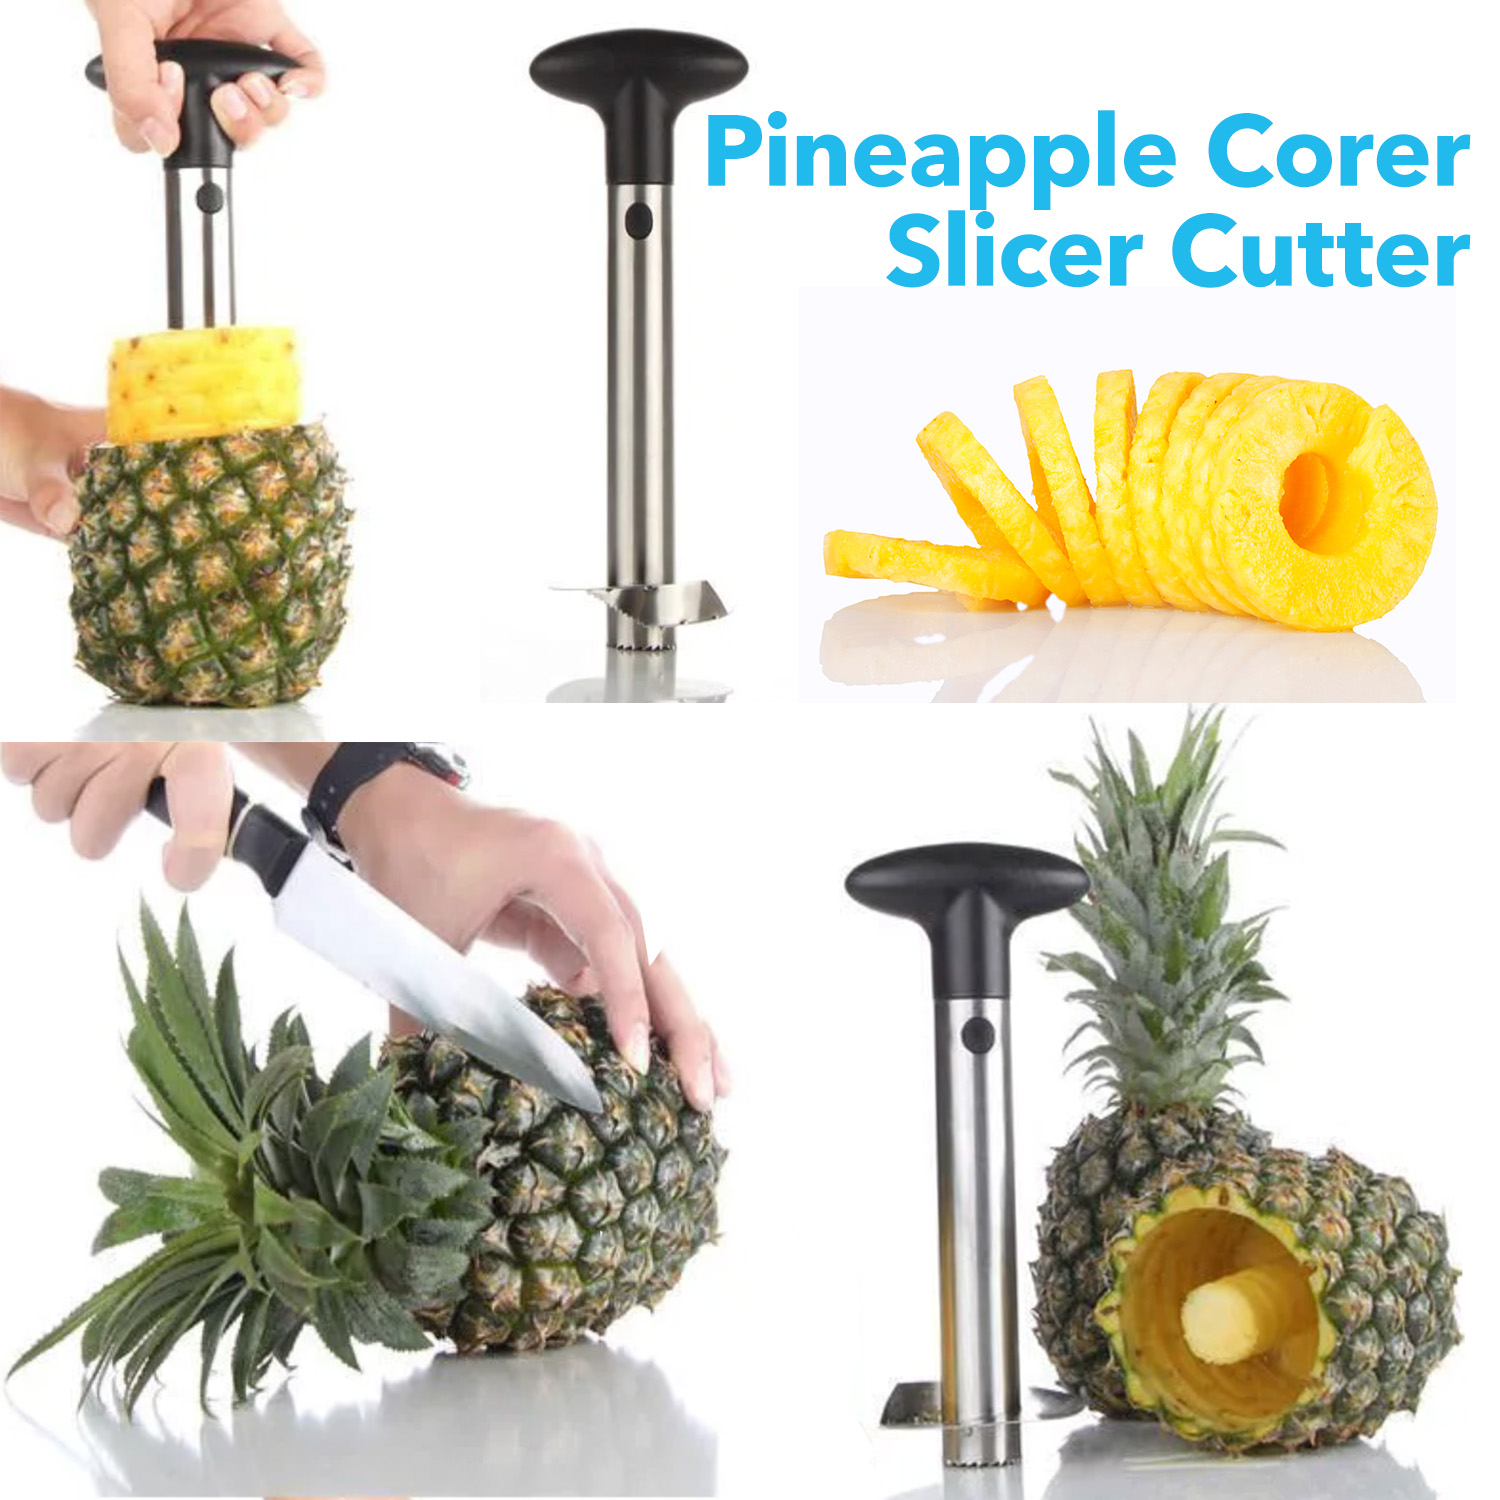 Piña Corer Slicer Cutter Acero inoxidable, Fruit Piña Corer Slicer Cutter Peeler, Herramientas de cocina de acero inoxidable, Kitchen Easy Fruit Cutter Gadget 